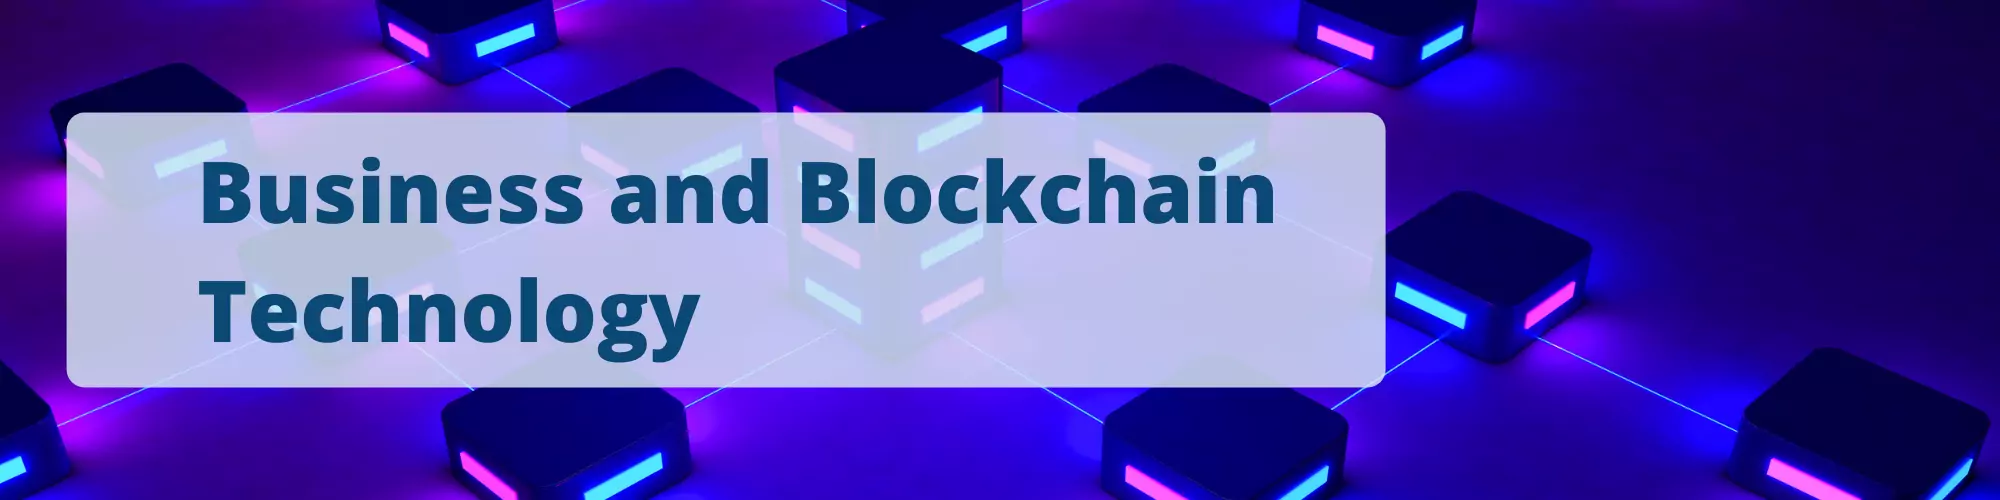 Business & Blockchain Technology